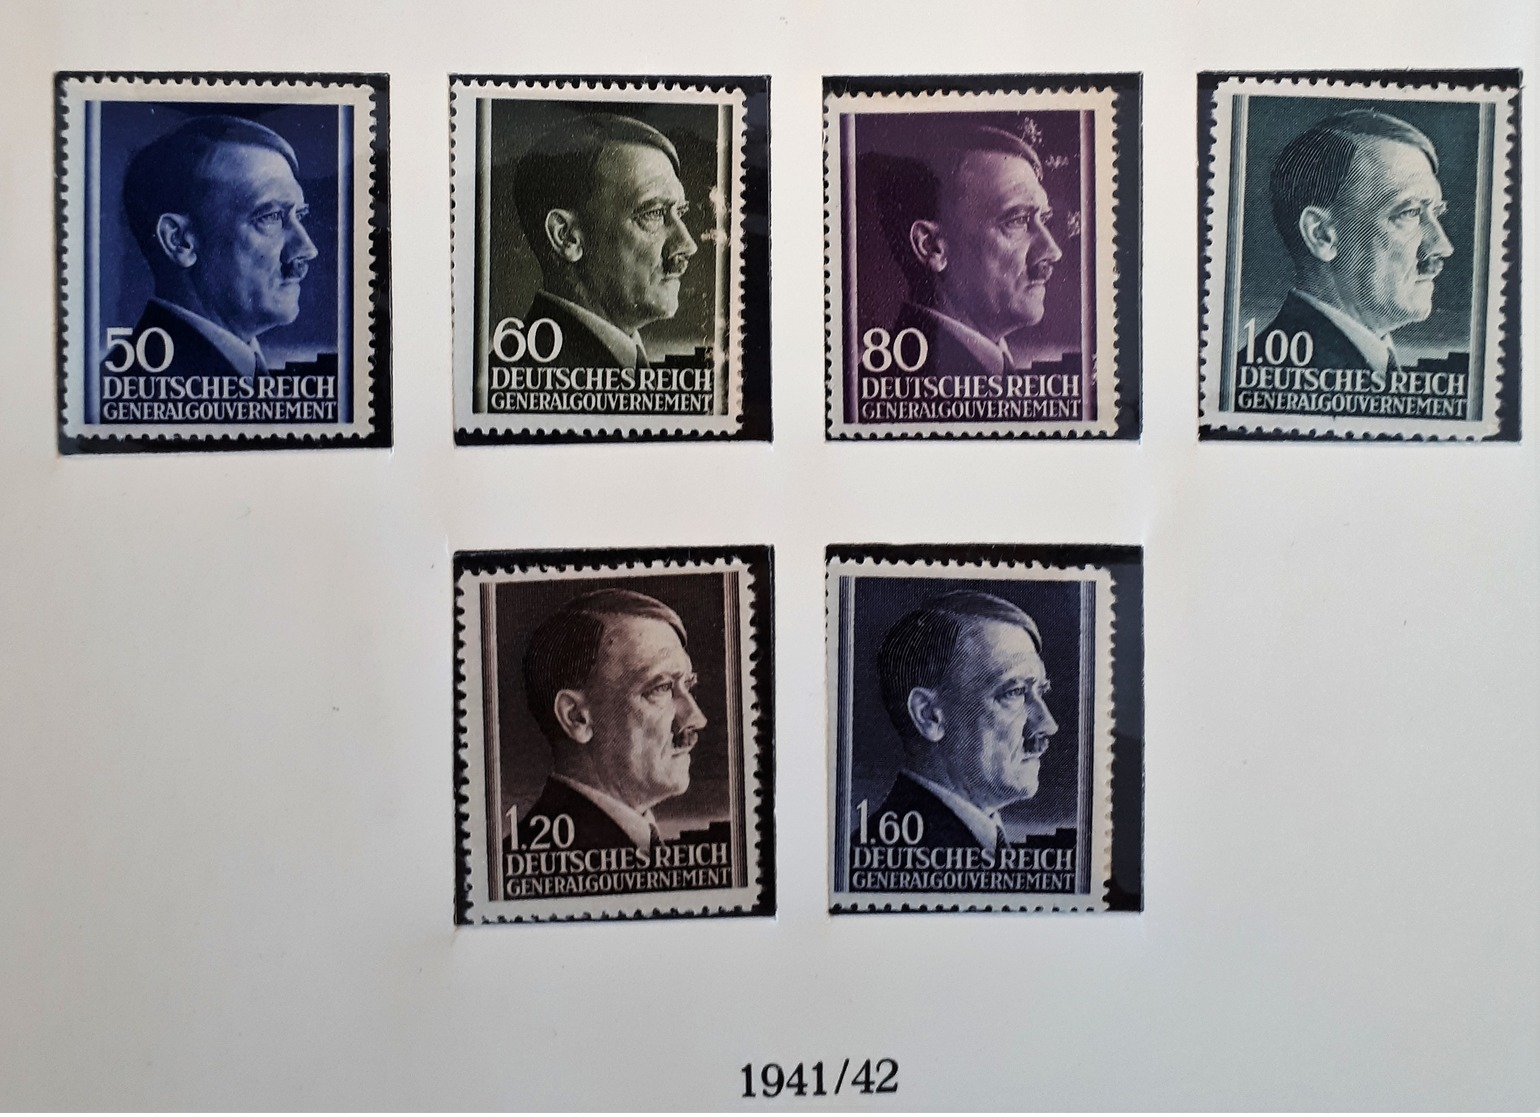 Poland - Occupation Stamps 1940/42 (General Gouvernement) - Algemene Overheid